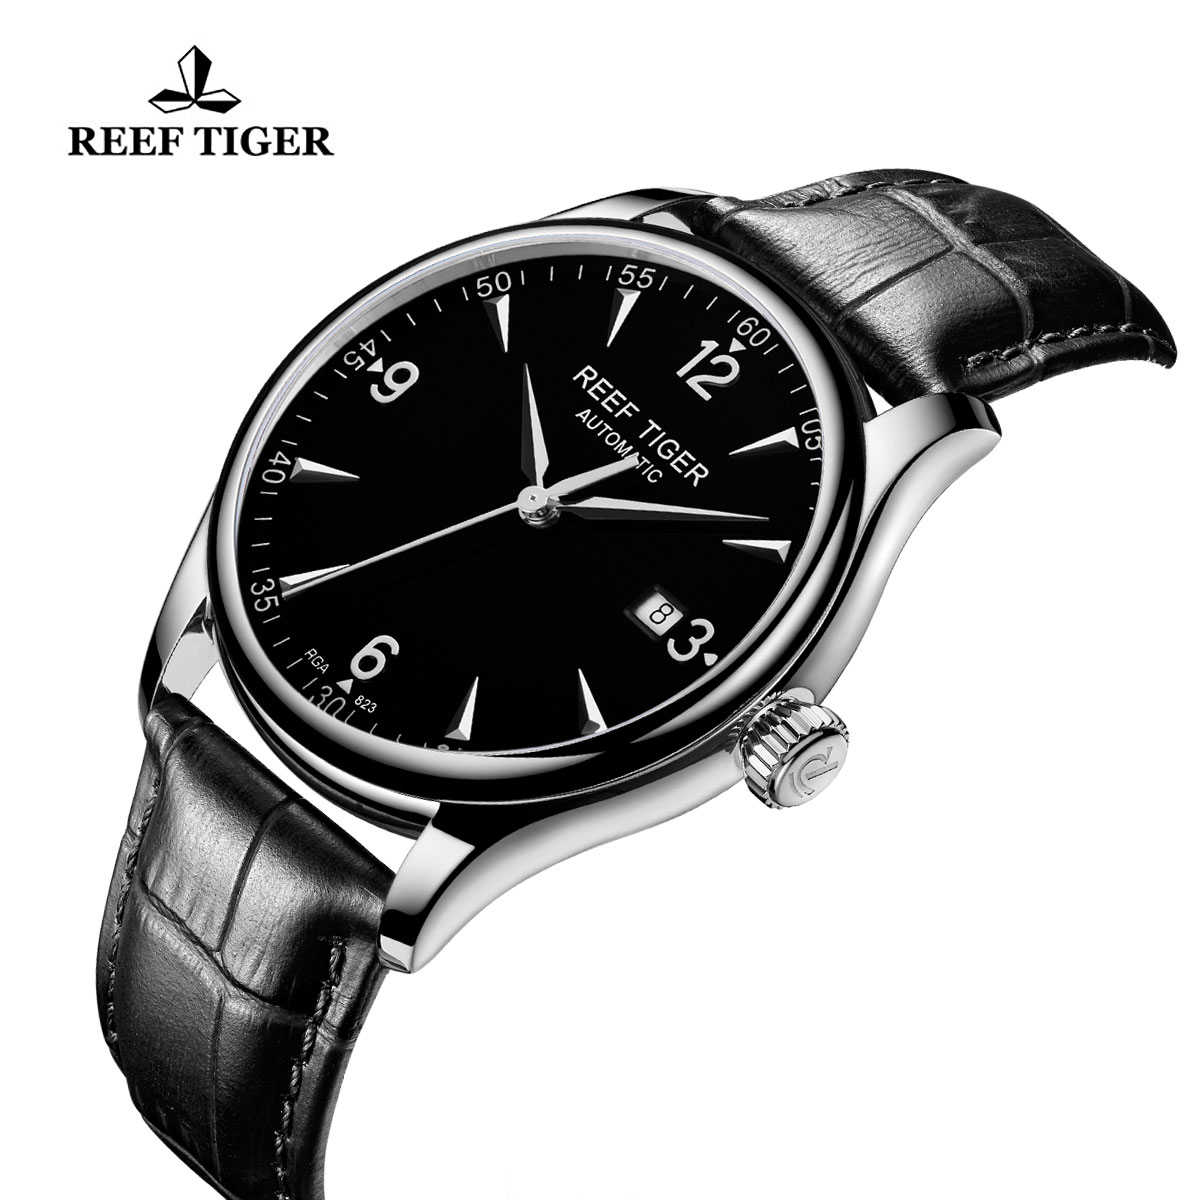 Reef Tiger Heritage Dress Automatic Watch Black Dial Calfskin Leather Strap RGA823G-YBB